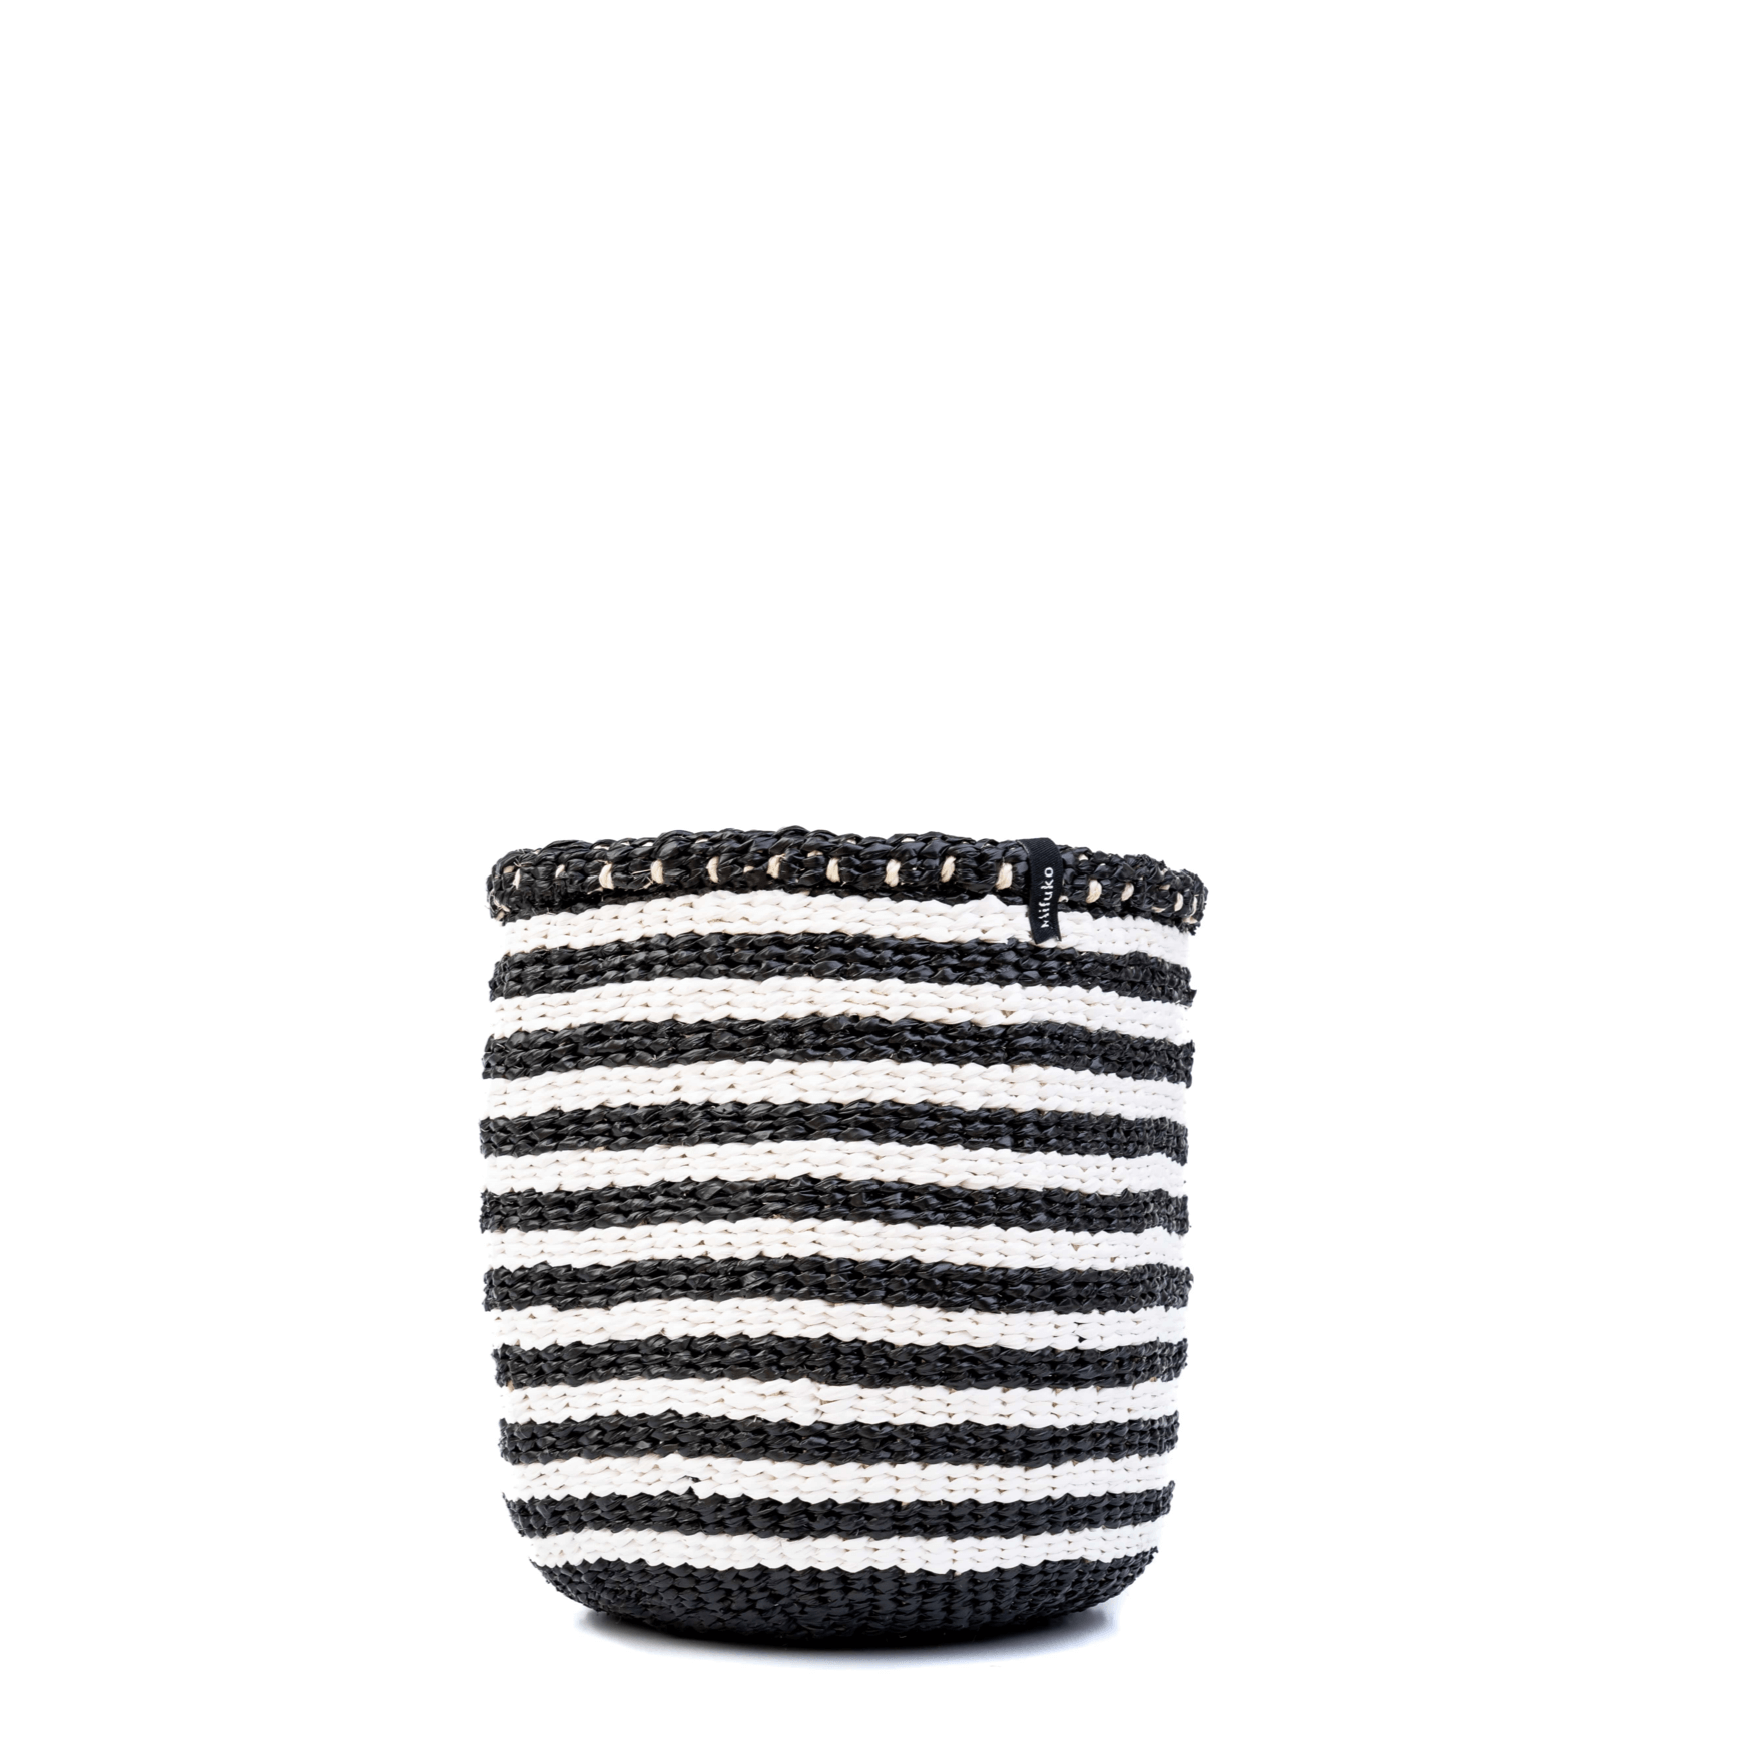 Mifuko Partly recycled plastic and sisal Small basket XS Kiondo basket | Thin black stripes XS